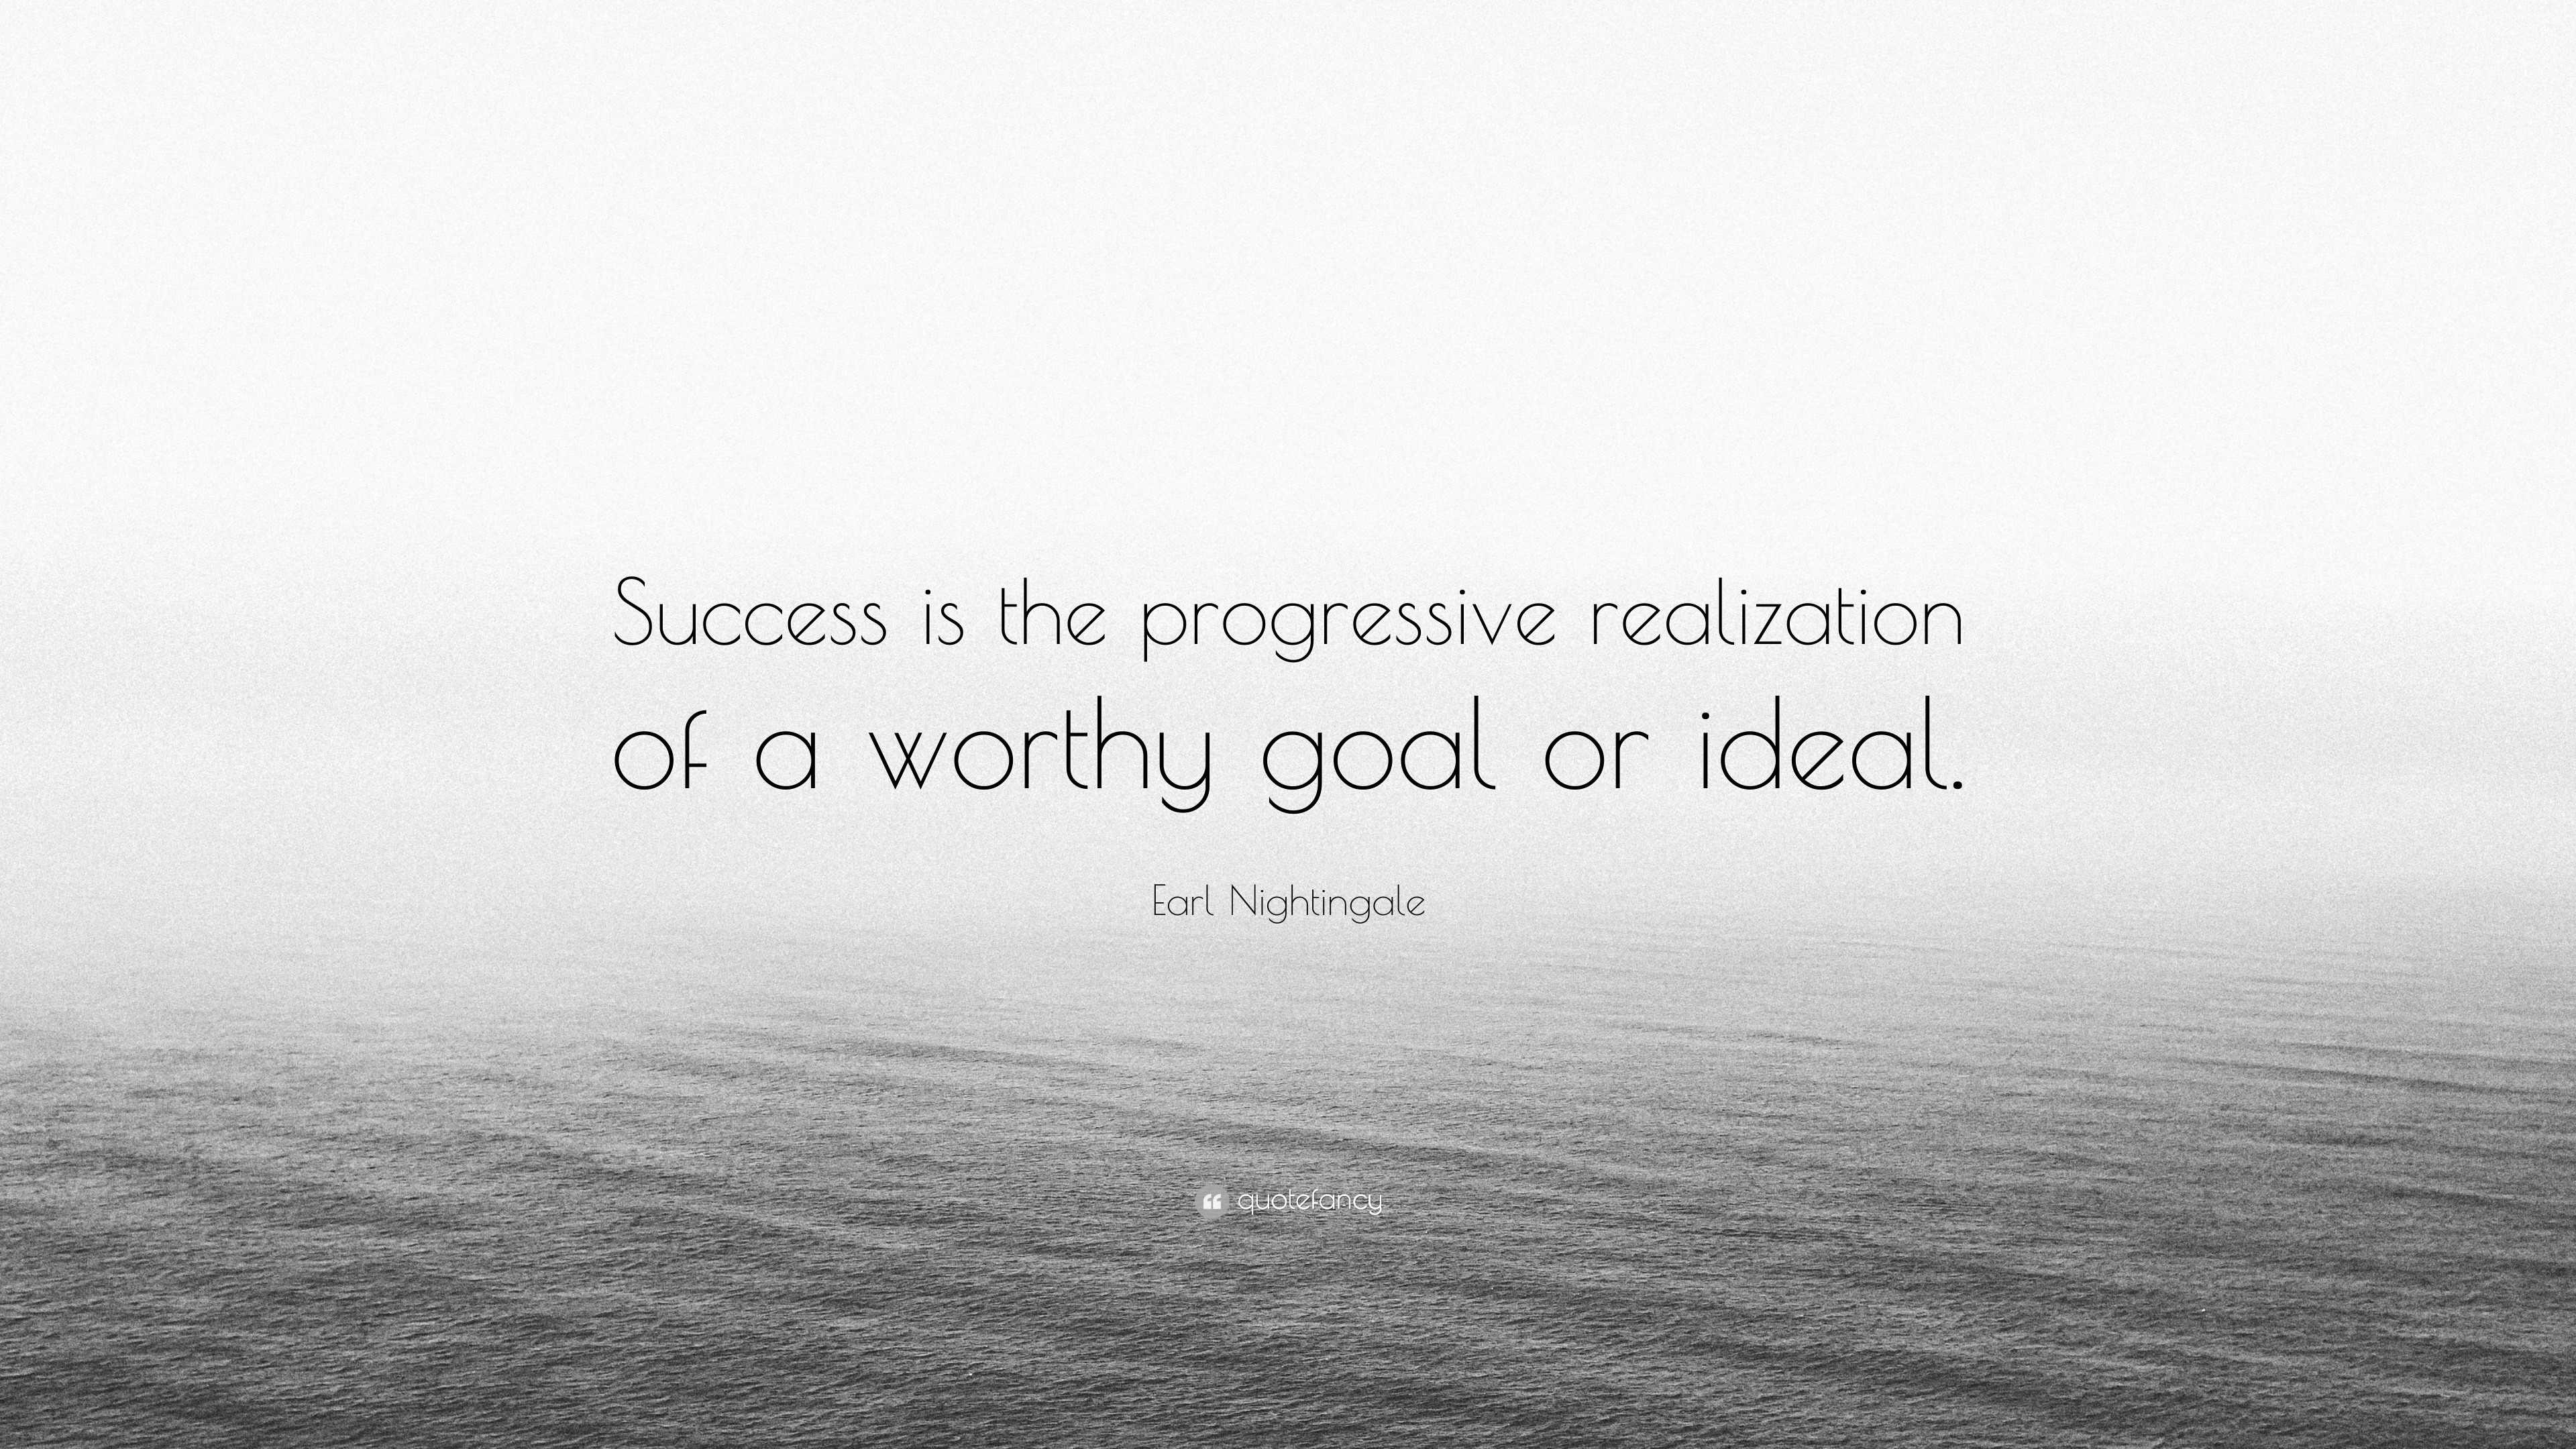 Earl Nightingale Quote “Success is the progressive